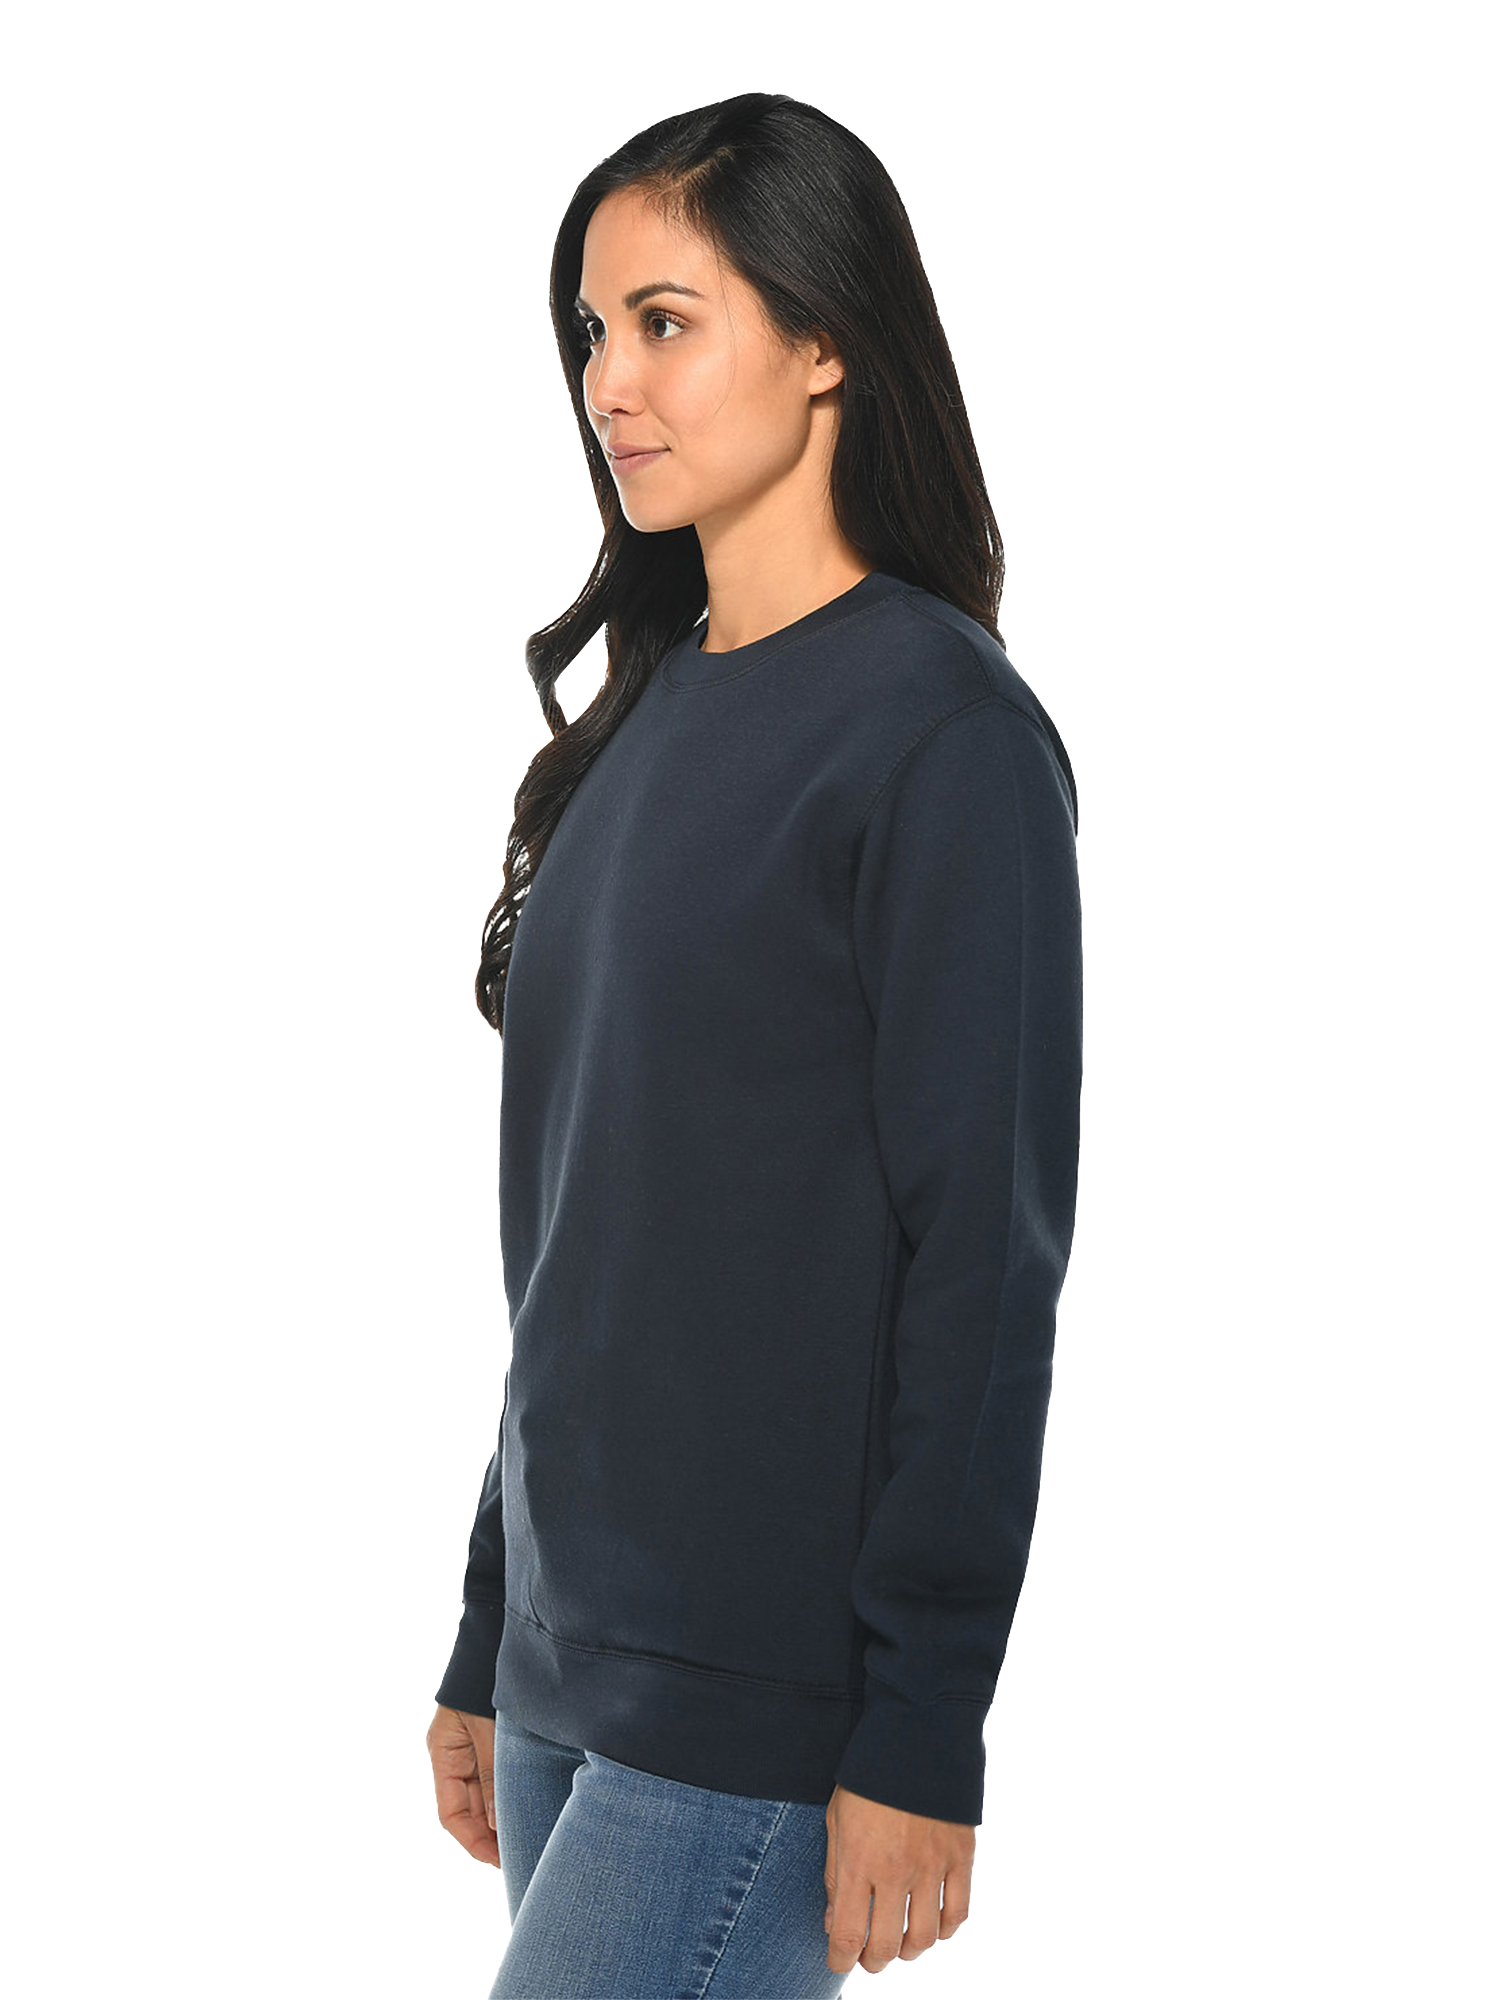 Navy Sweatshirts for Men Womens Sweatshirt Casual Plain Long Sleeve Navy Blue Sweaters for Women and Men - image 3 of 5